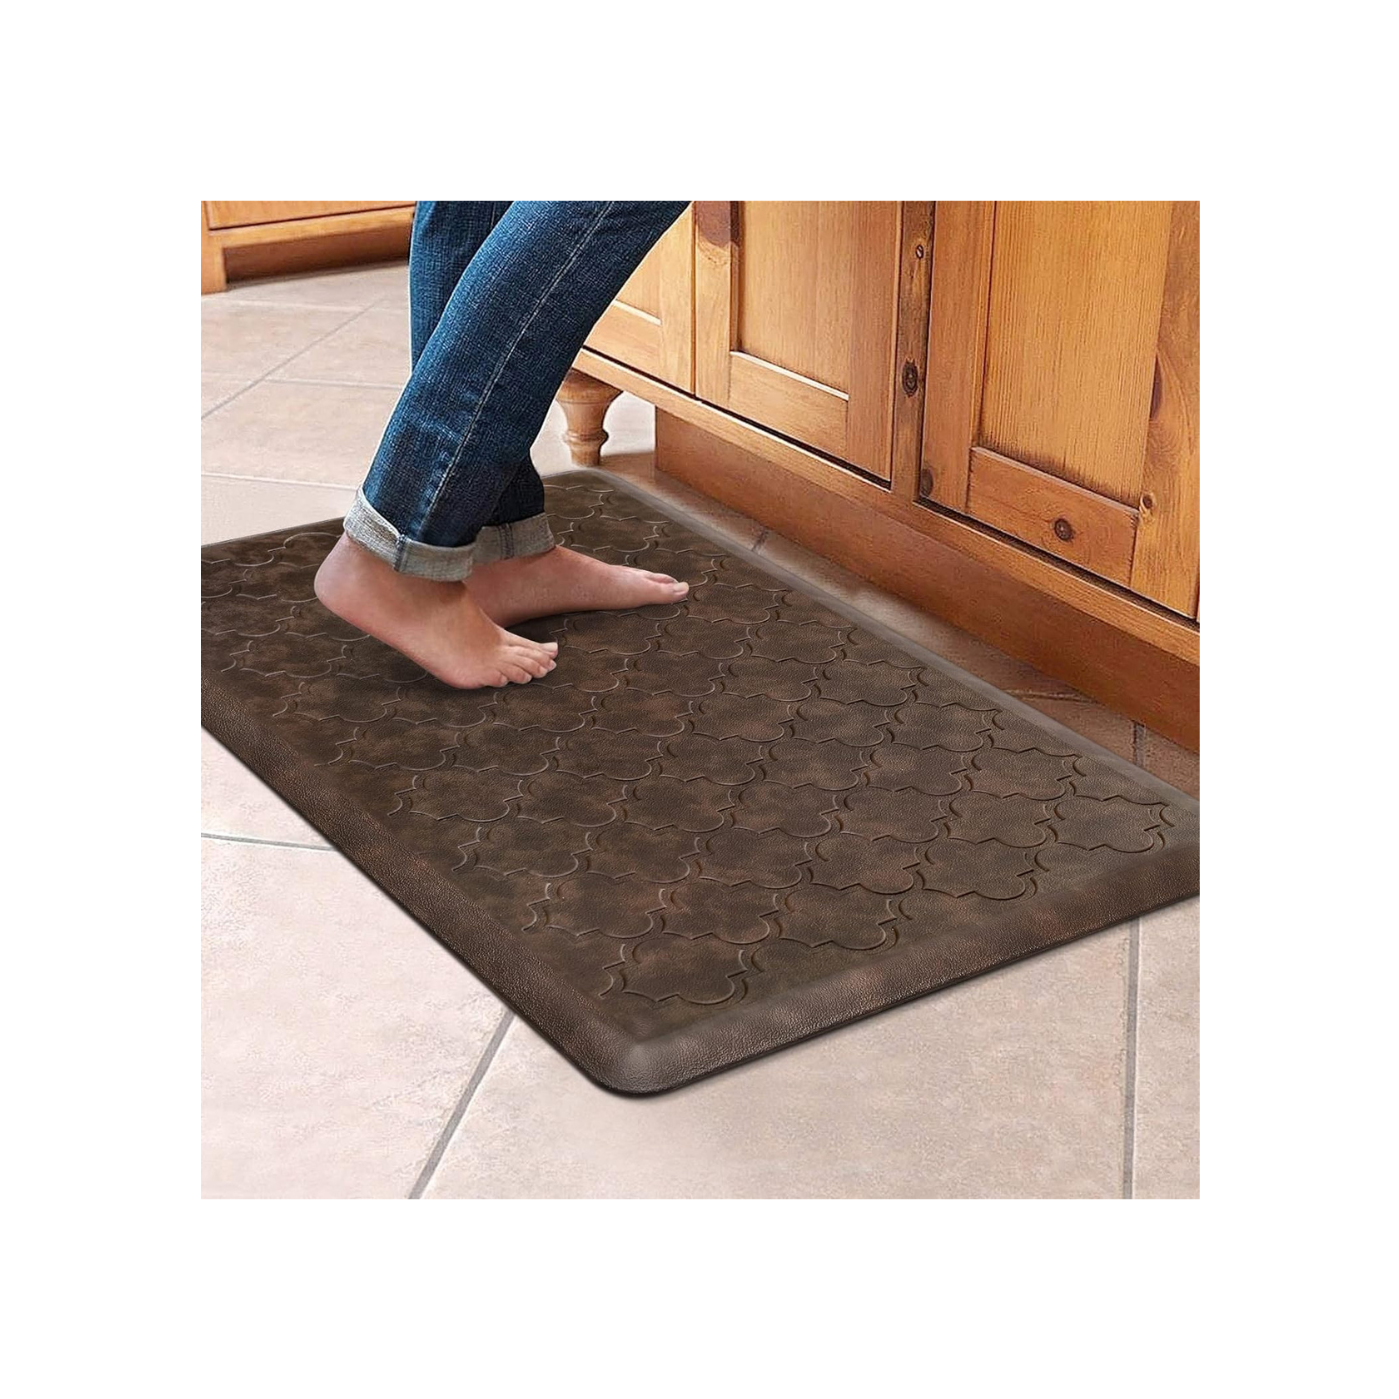 WiseLife 17.3" x 28" Non Slip Cushioned Anti Fatigue Kitchen Floor Mat